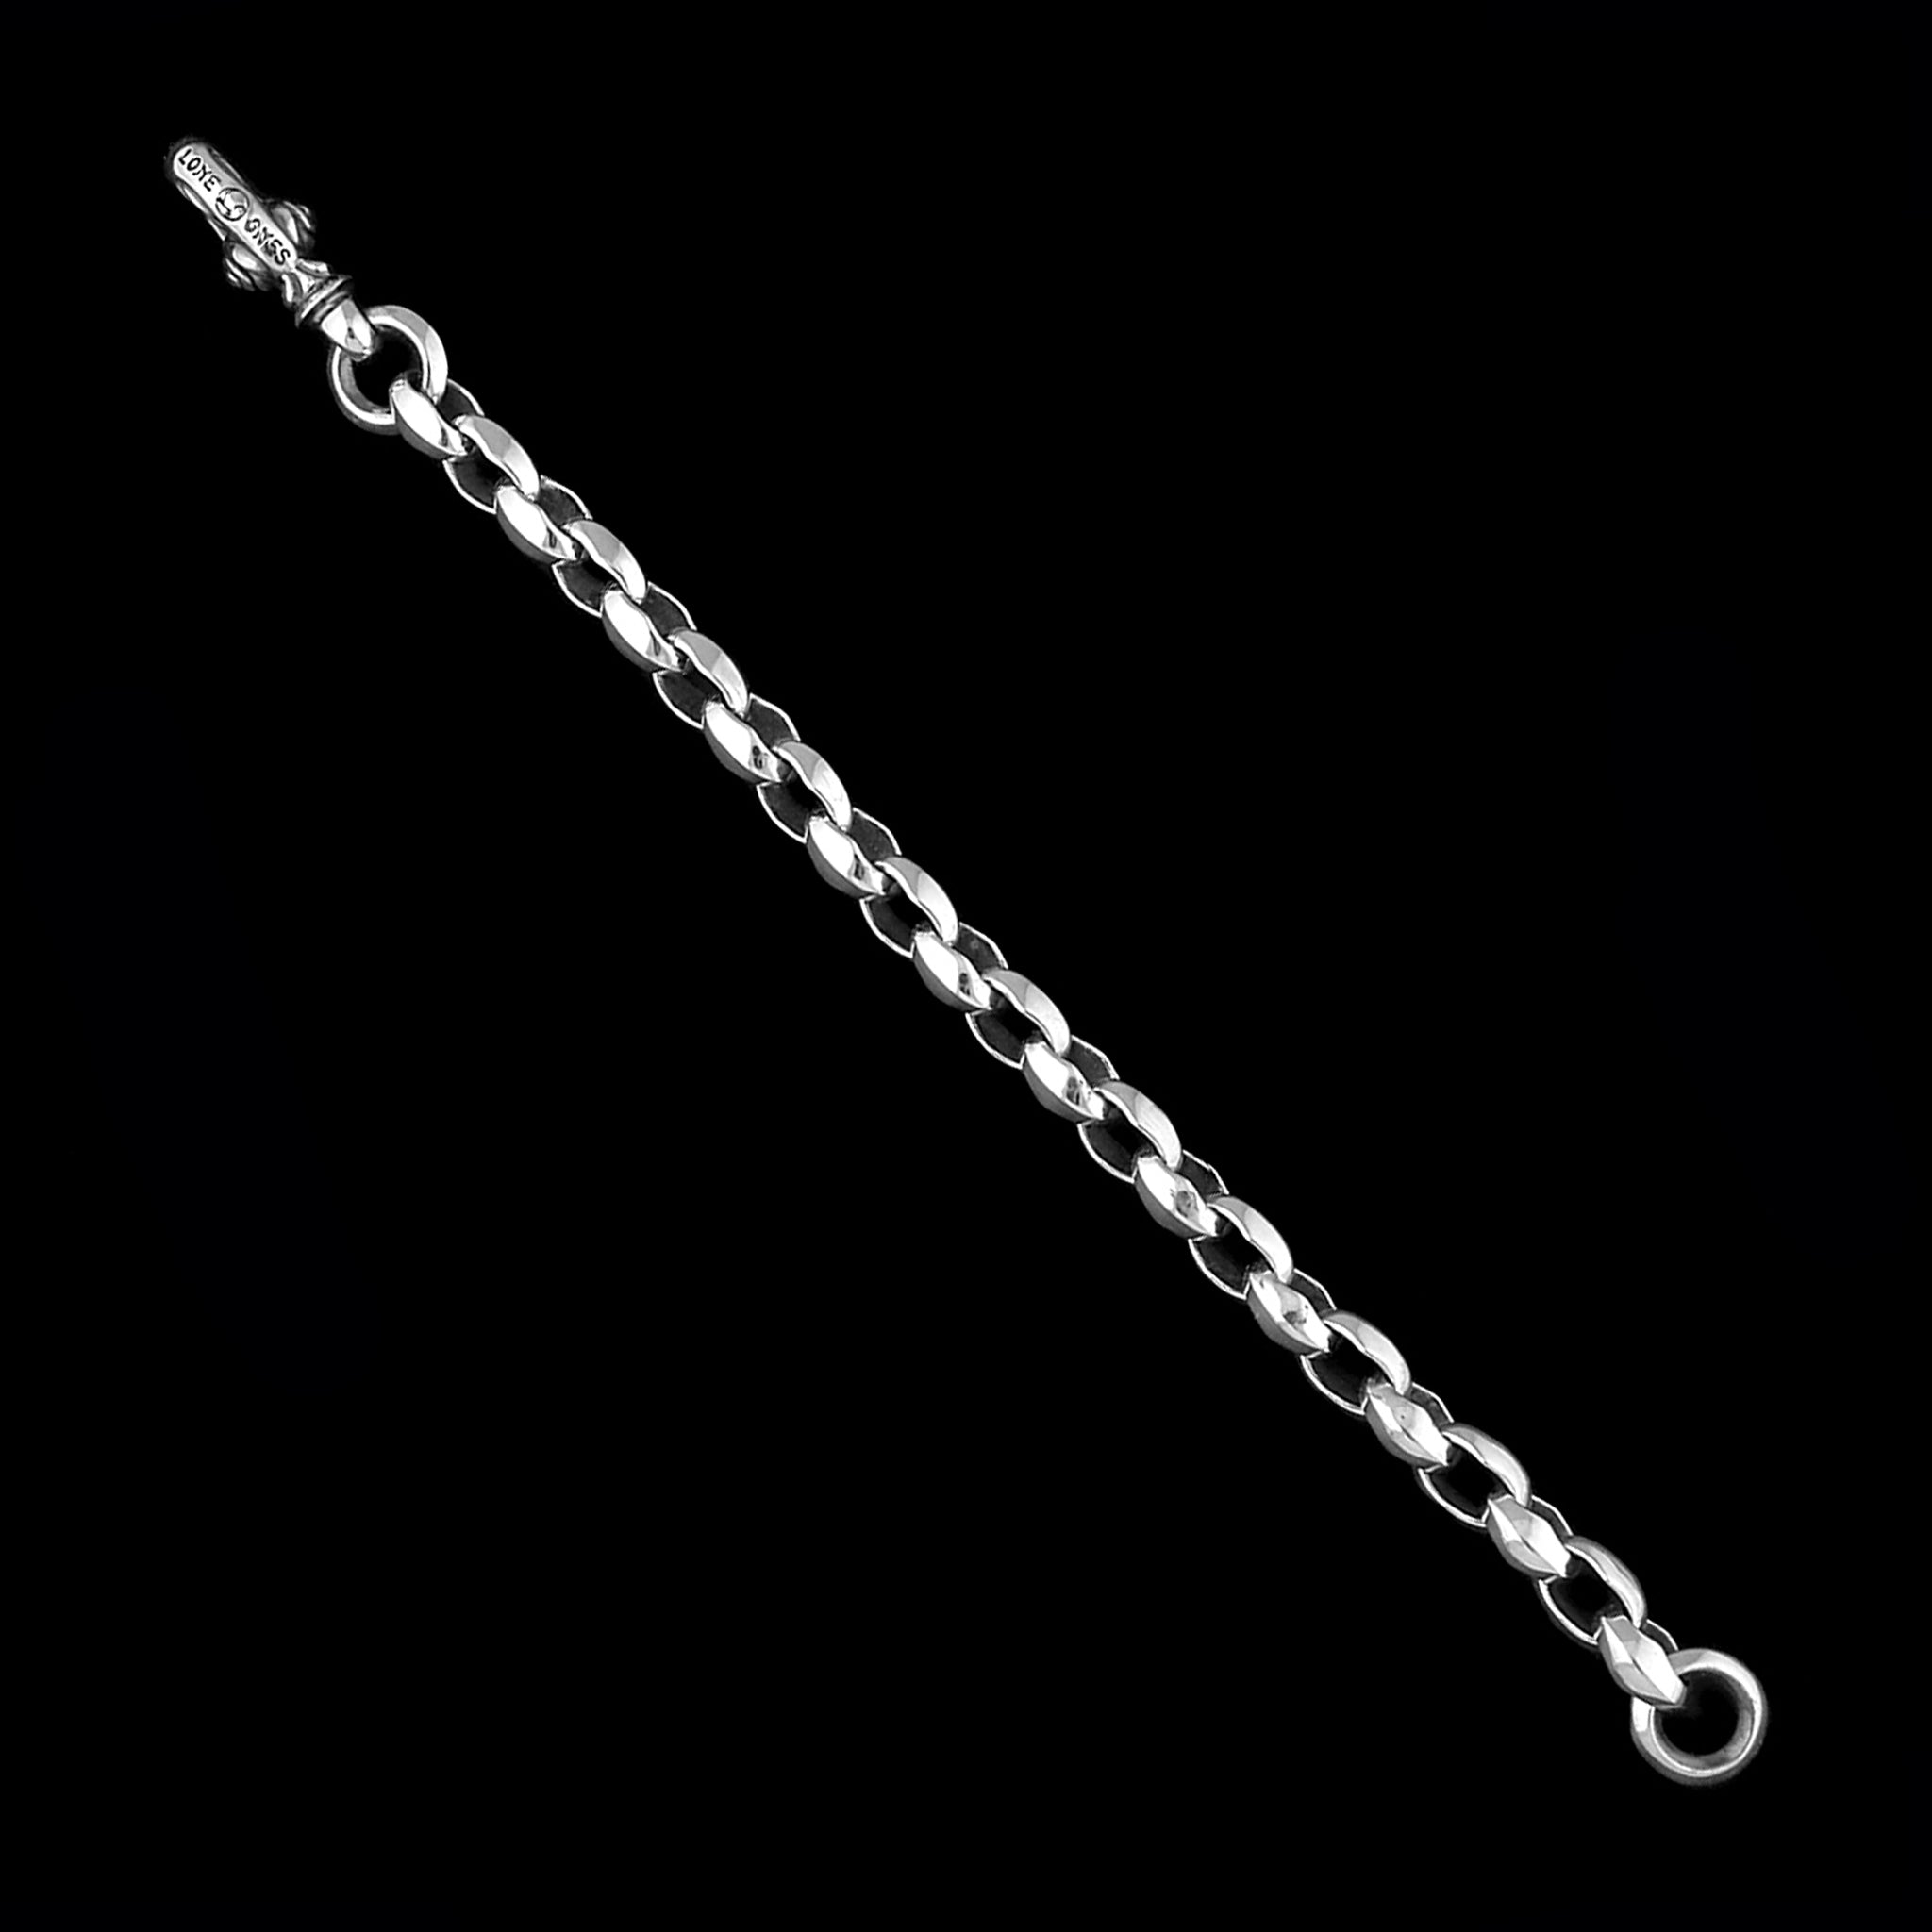 Lone Ones - Small Silk Link Bracelet – luxeinc.co